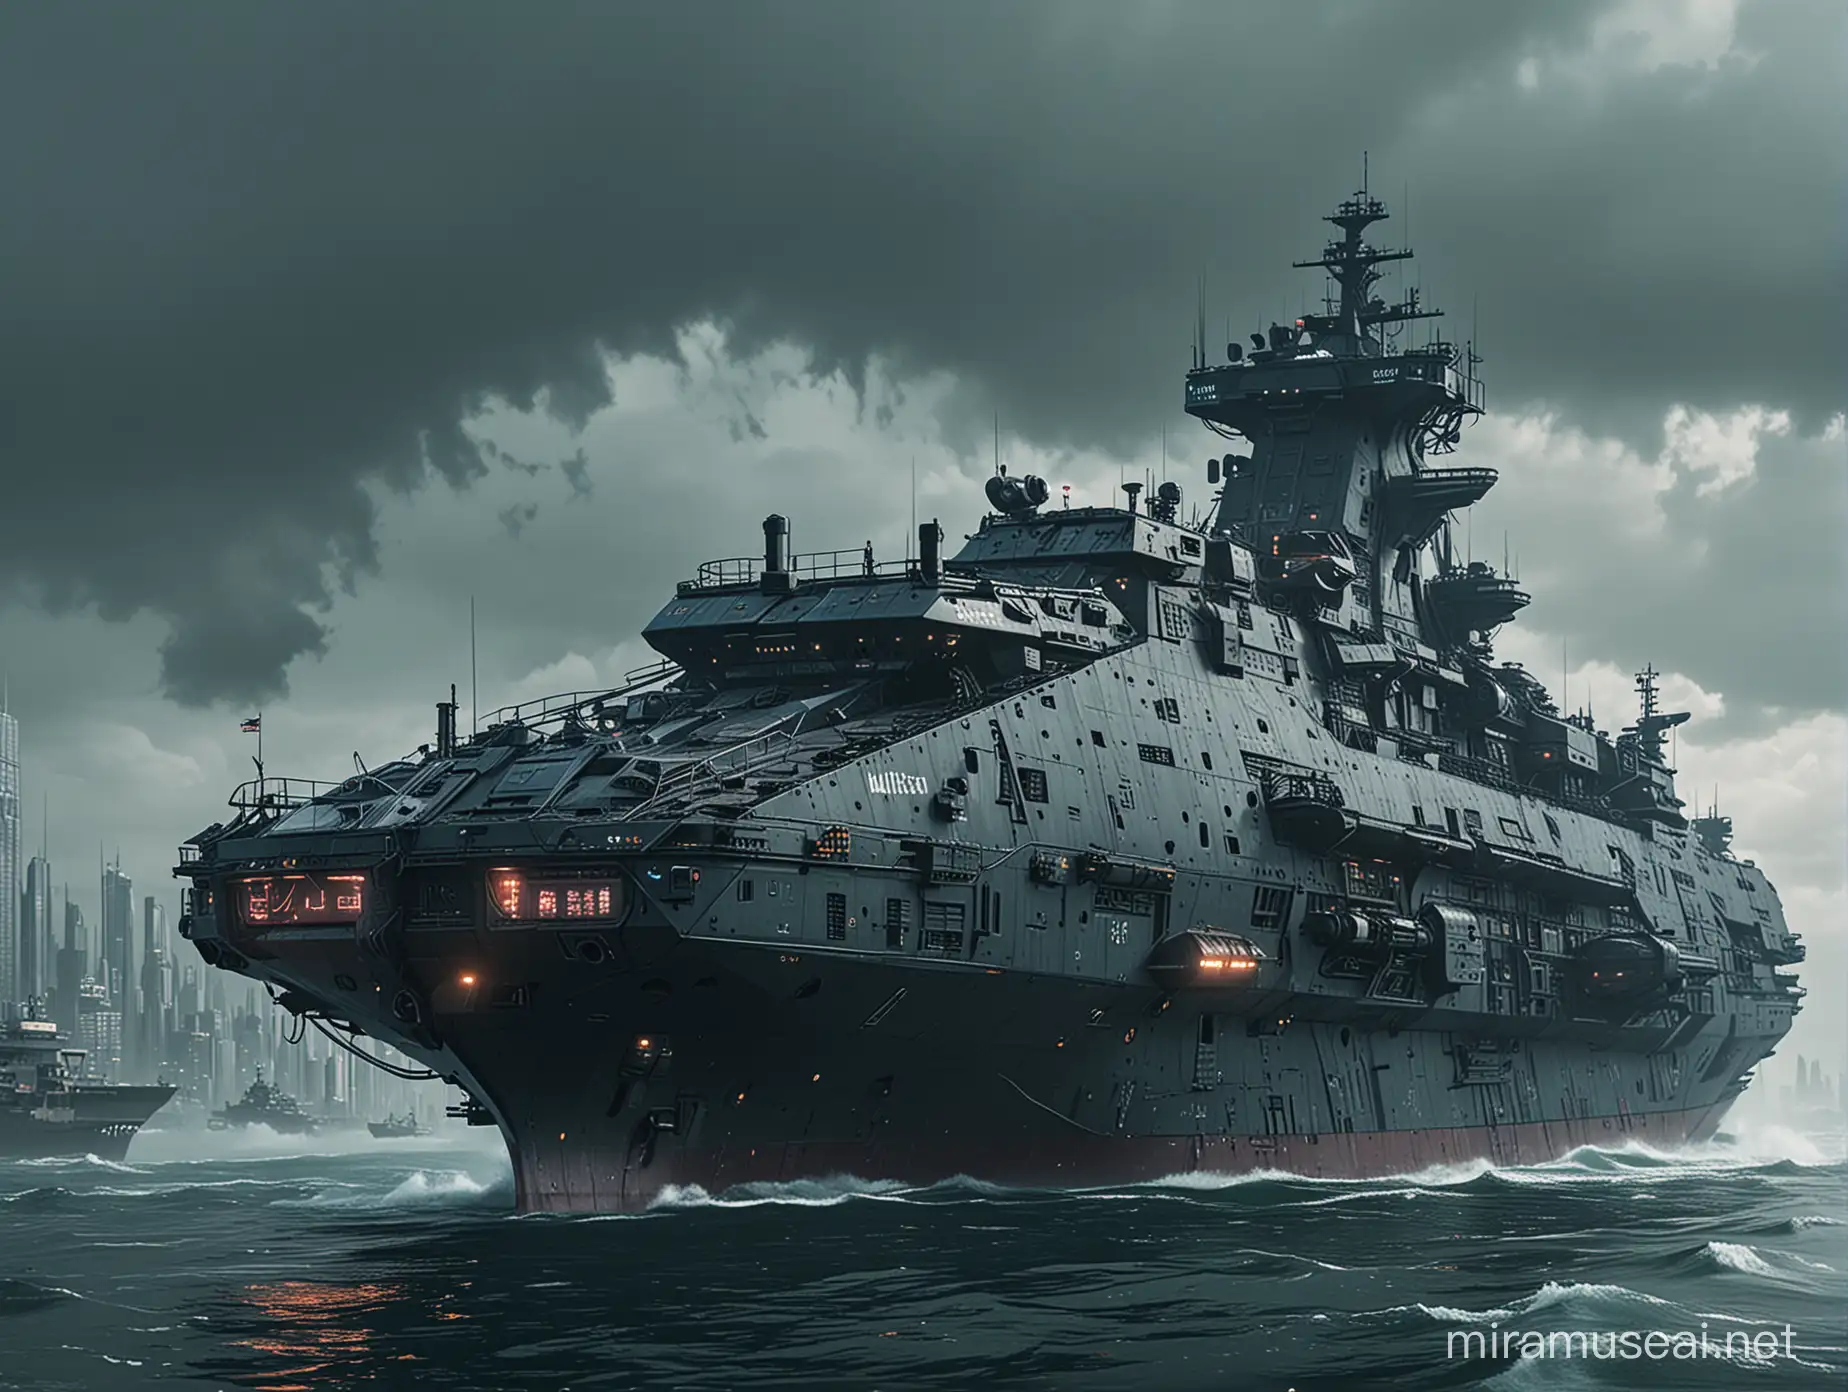 a big cyberpunk sea ship with the name "MILITECH"